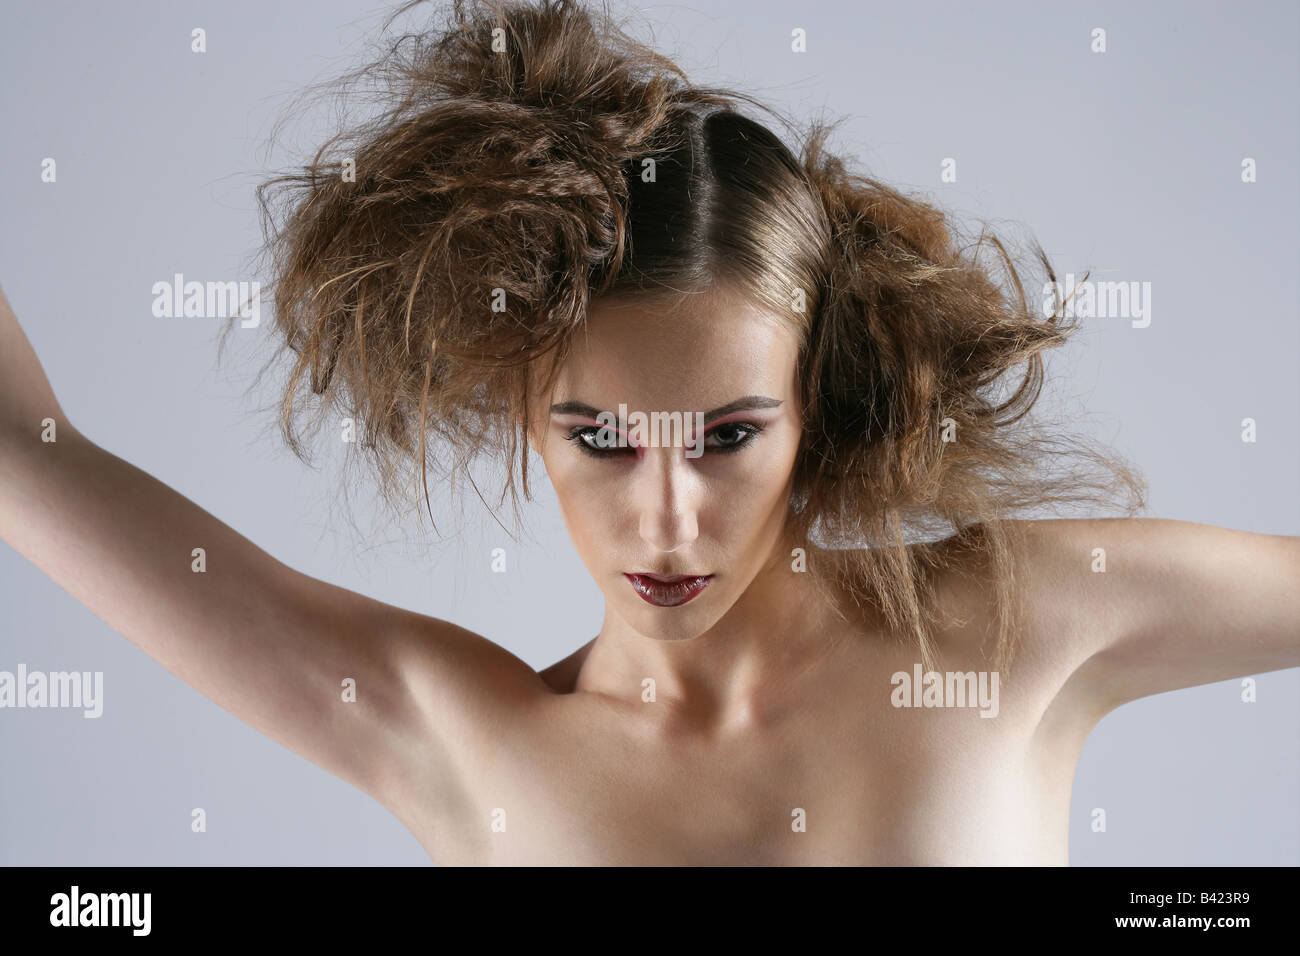 Fashion image female model with wild hair Stock Photo